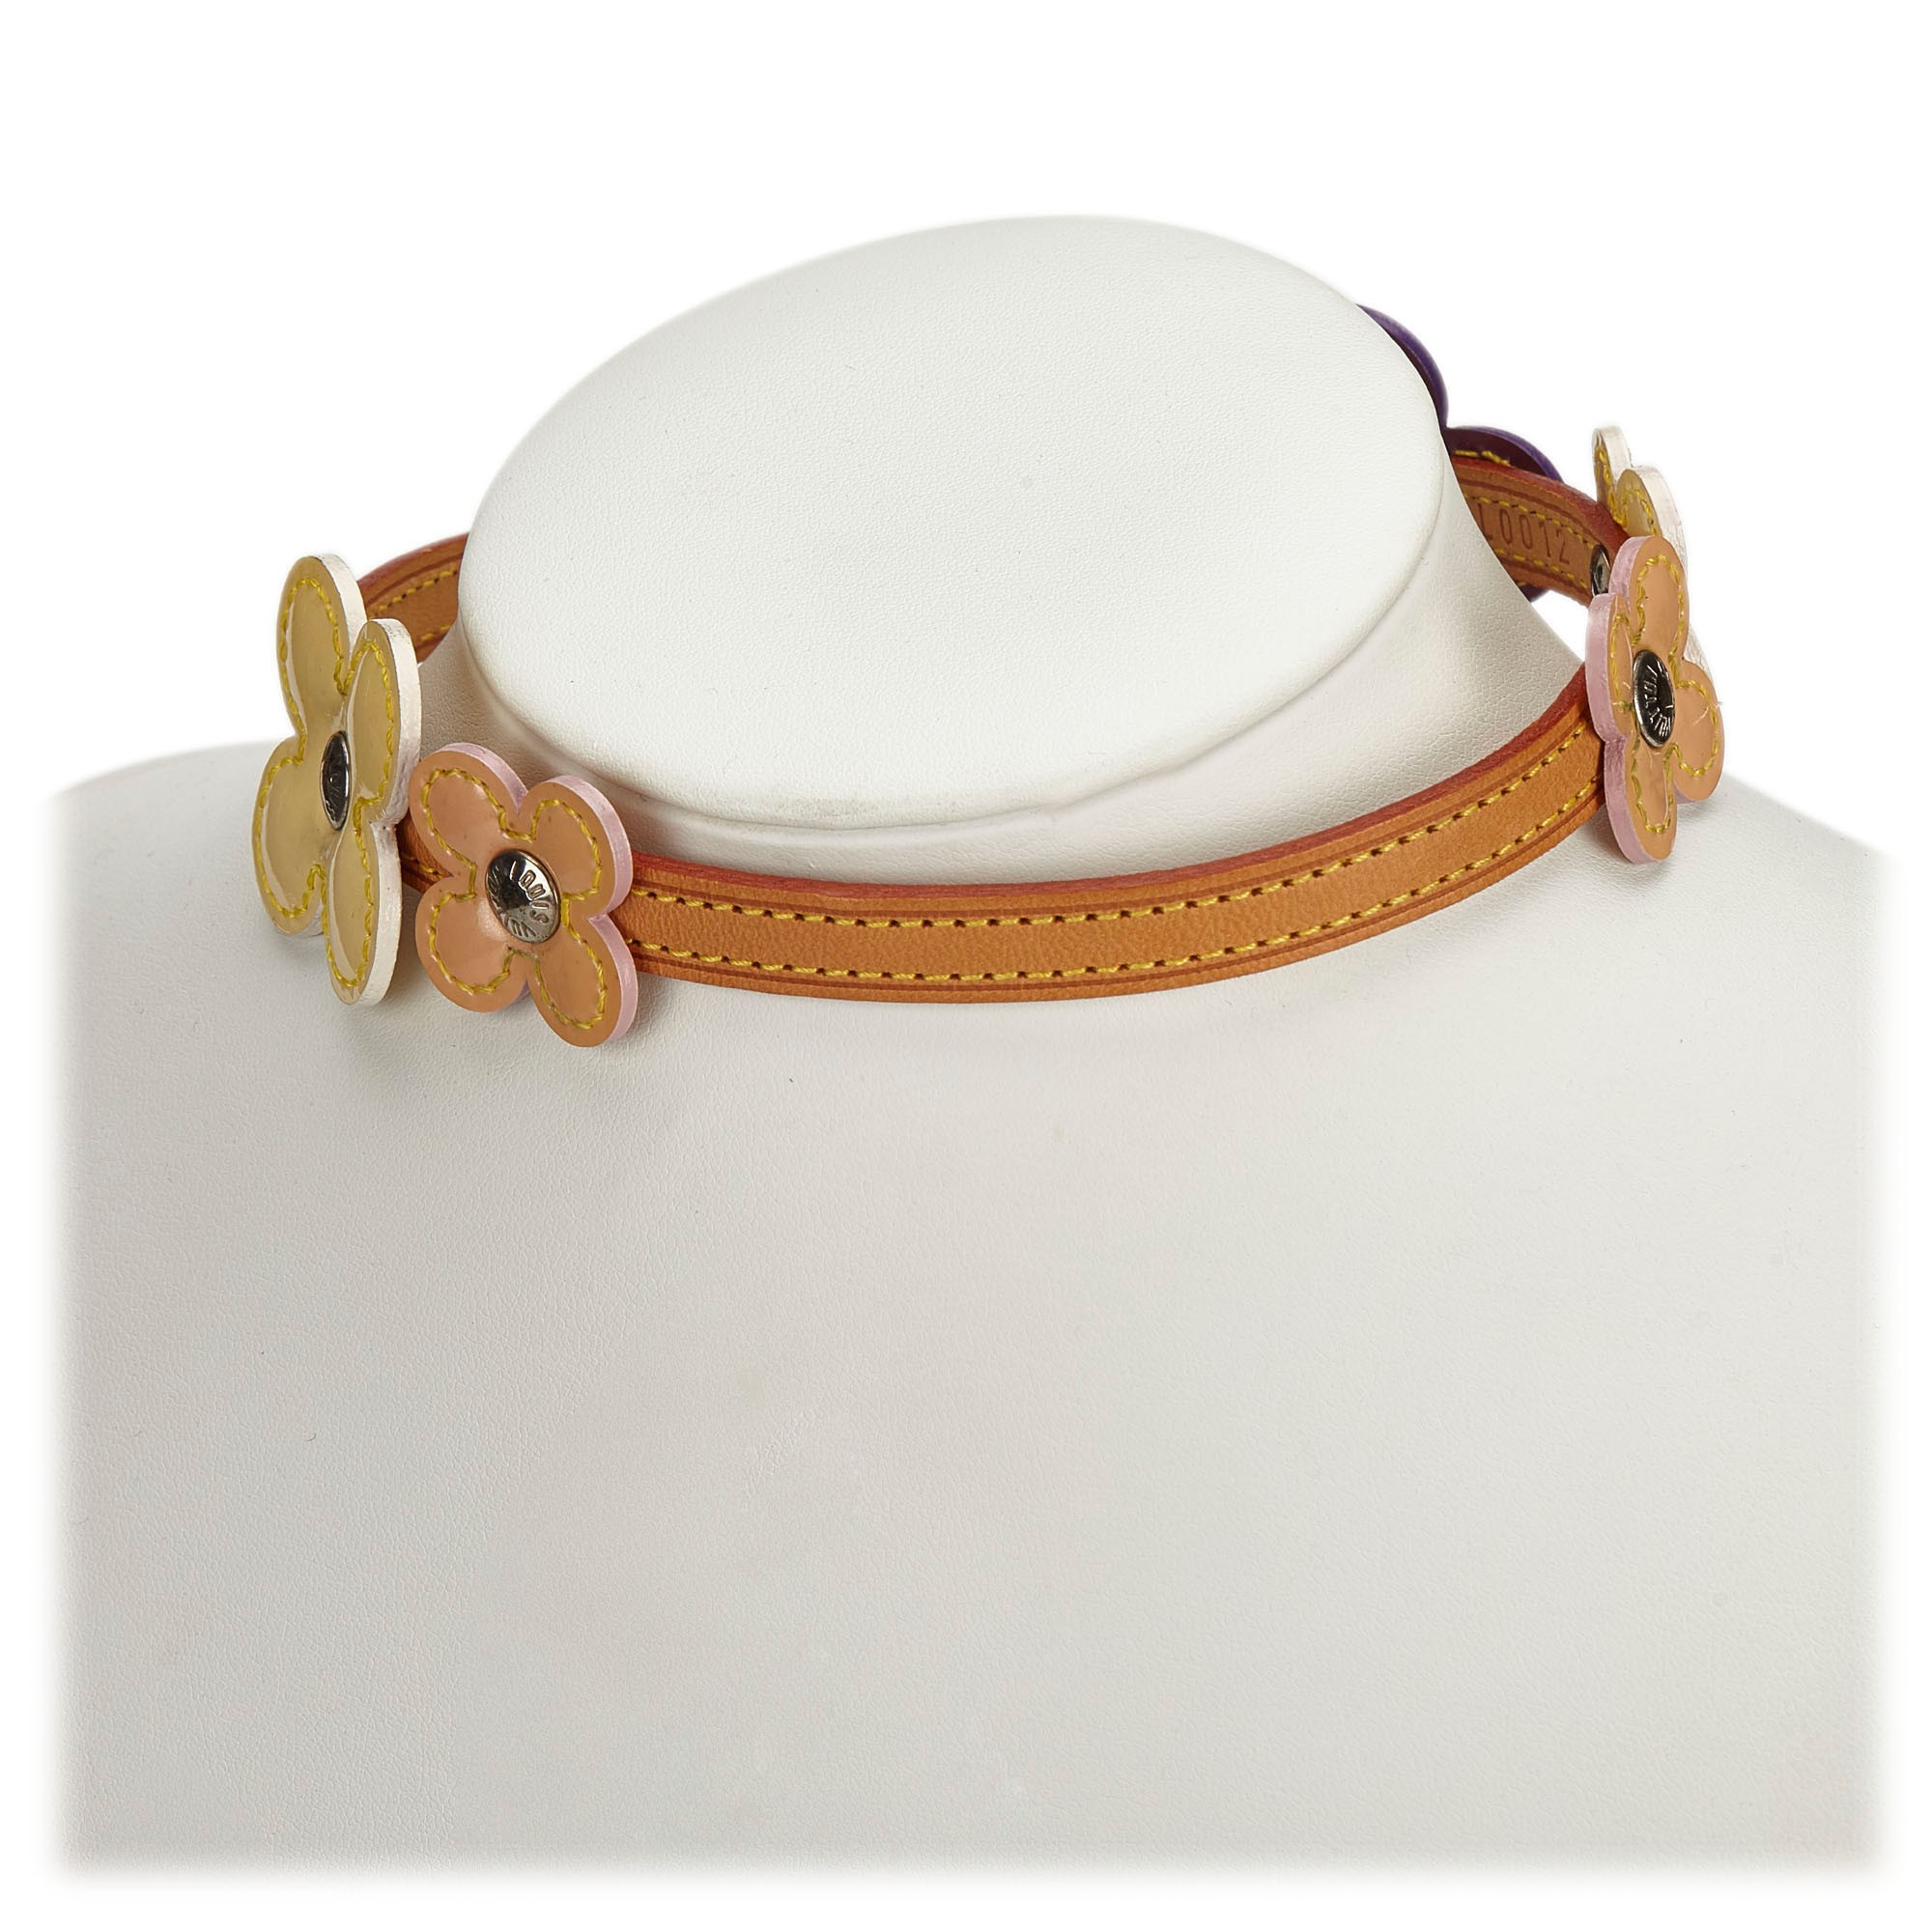 Louis Vuitton Style Enameled Fleur Long Layered Necklace